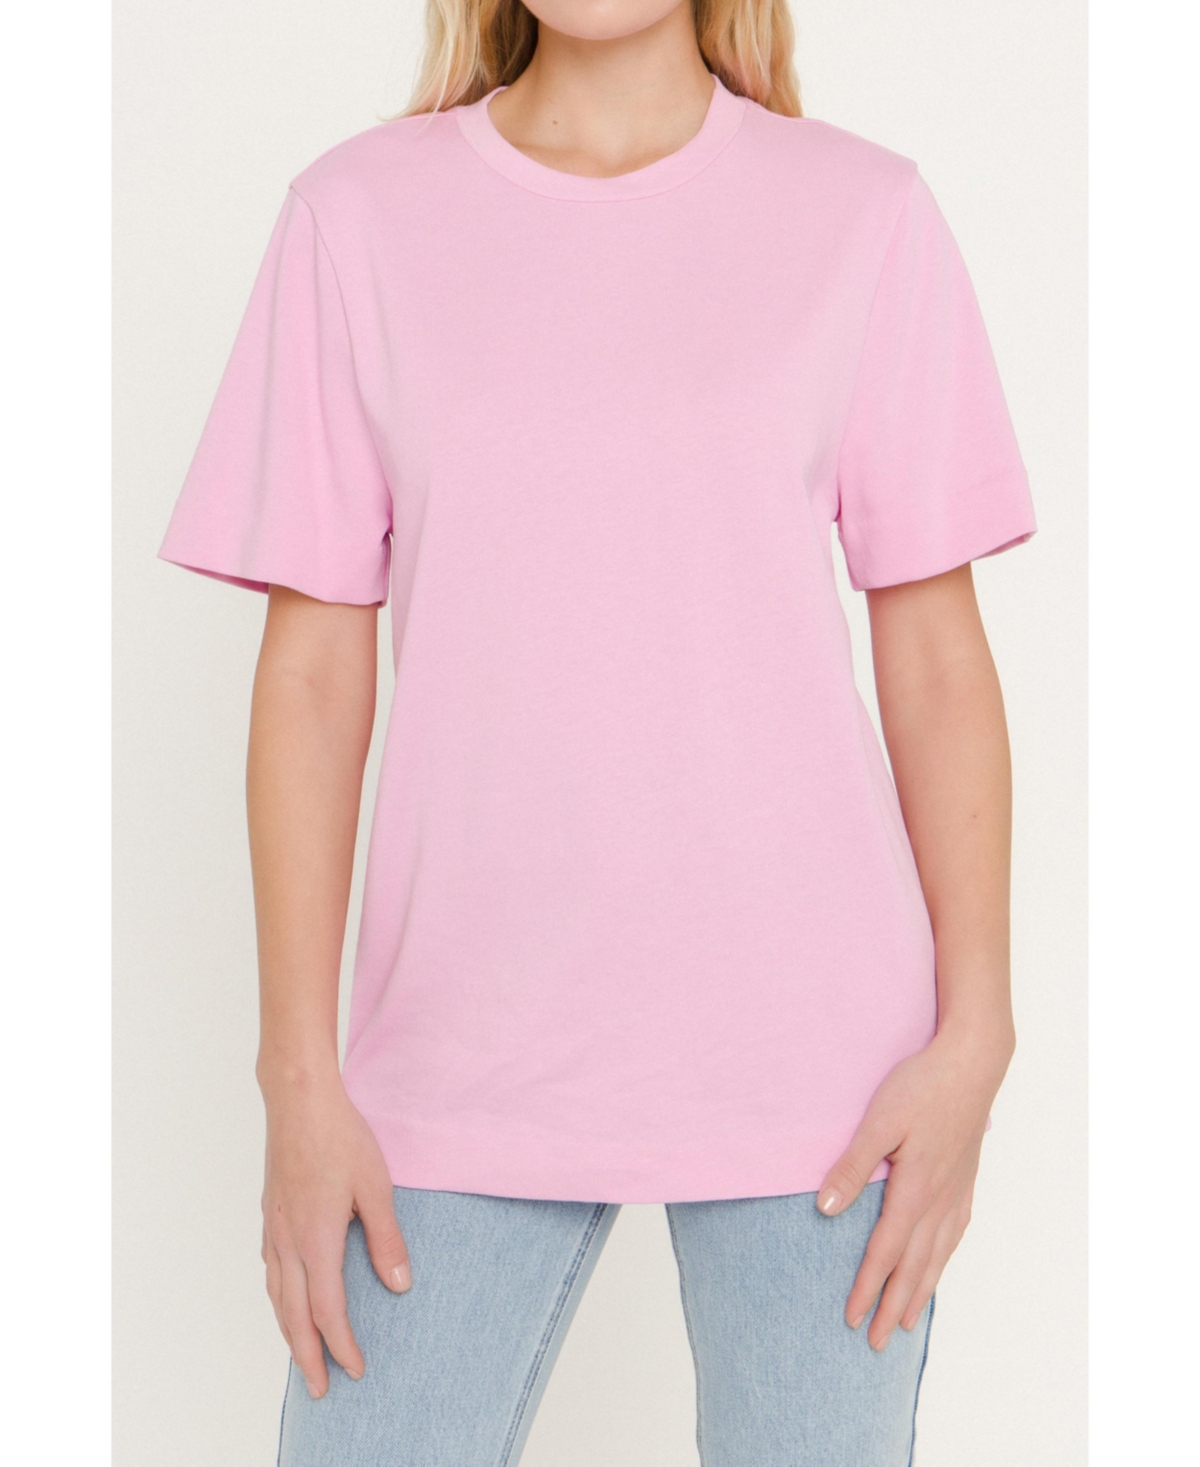 Women's Basic T-shirt - Pink